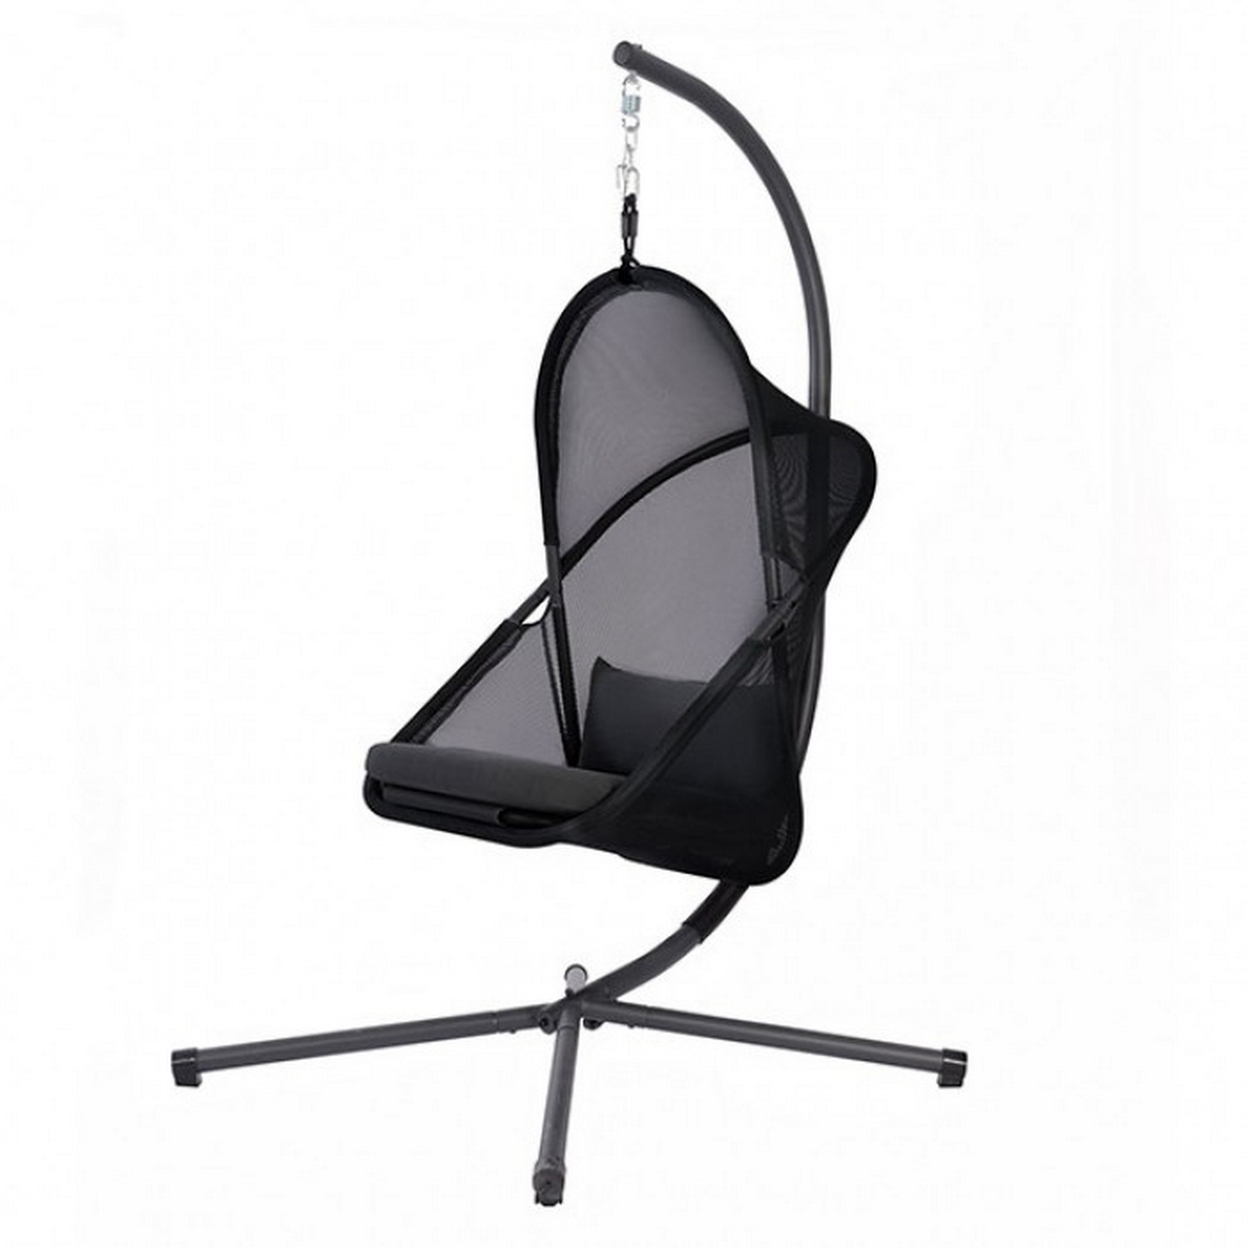 28 Inch Swing Chair, Sturdy Steel Frame, Breathable Mesh, Black And Gray- Saltoro Sherpi